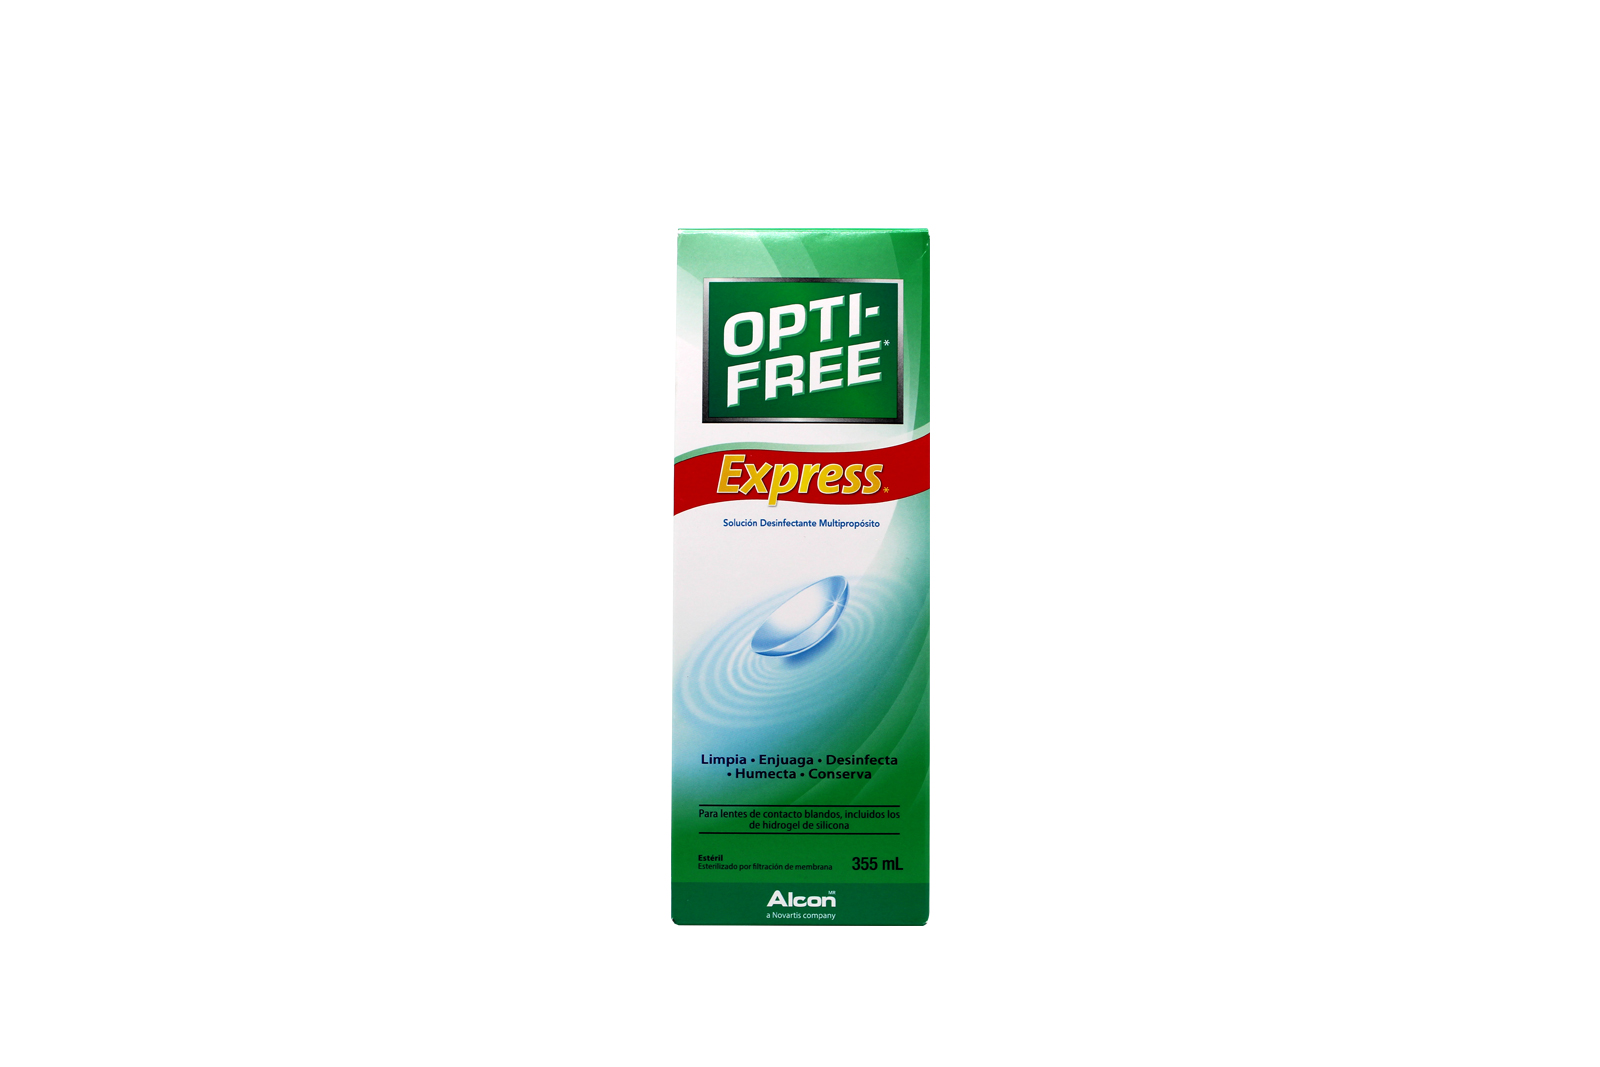 Opti-Free Expreess 355ml